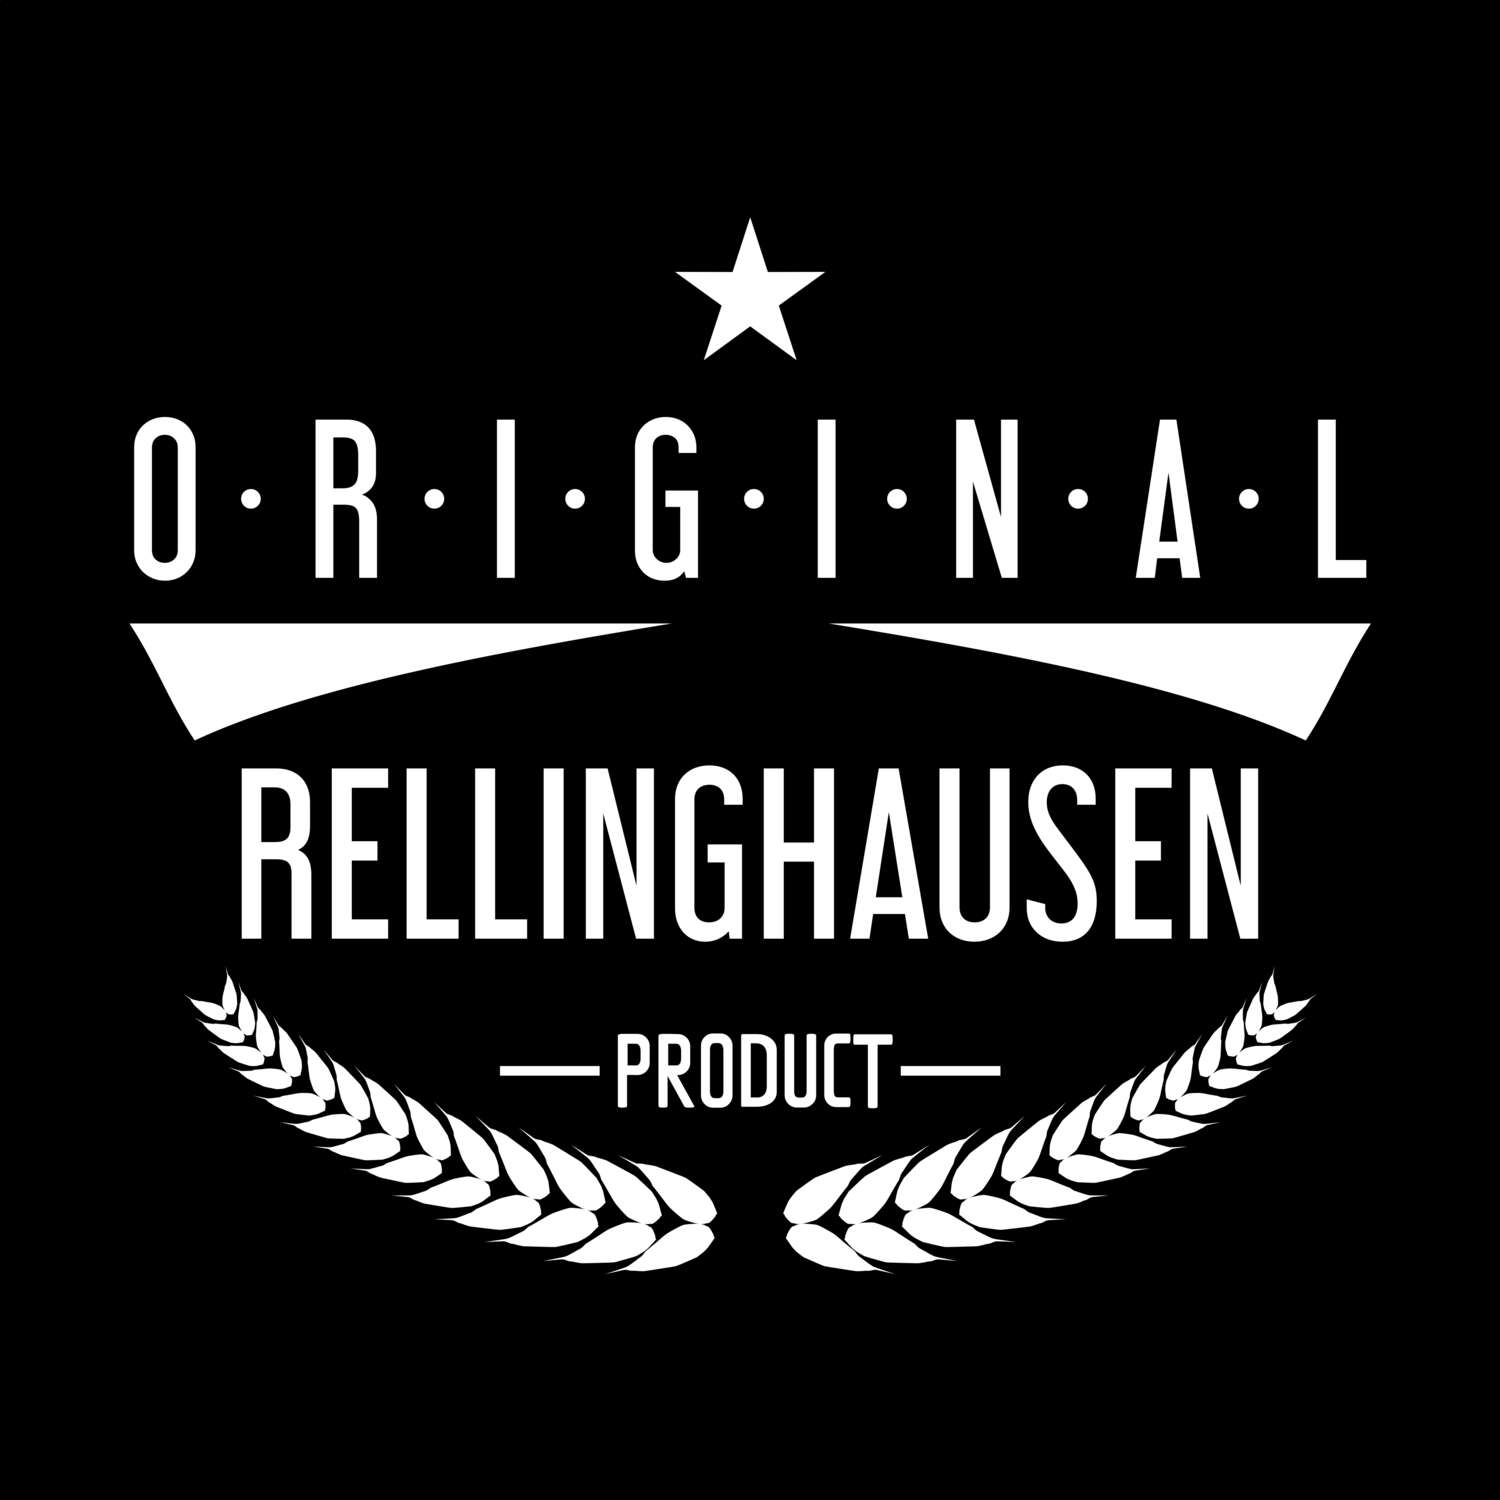 Rellinghausen T-Shirt »Original Product«